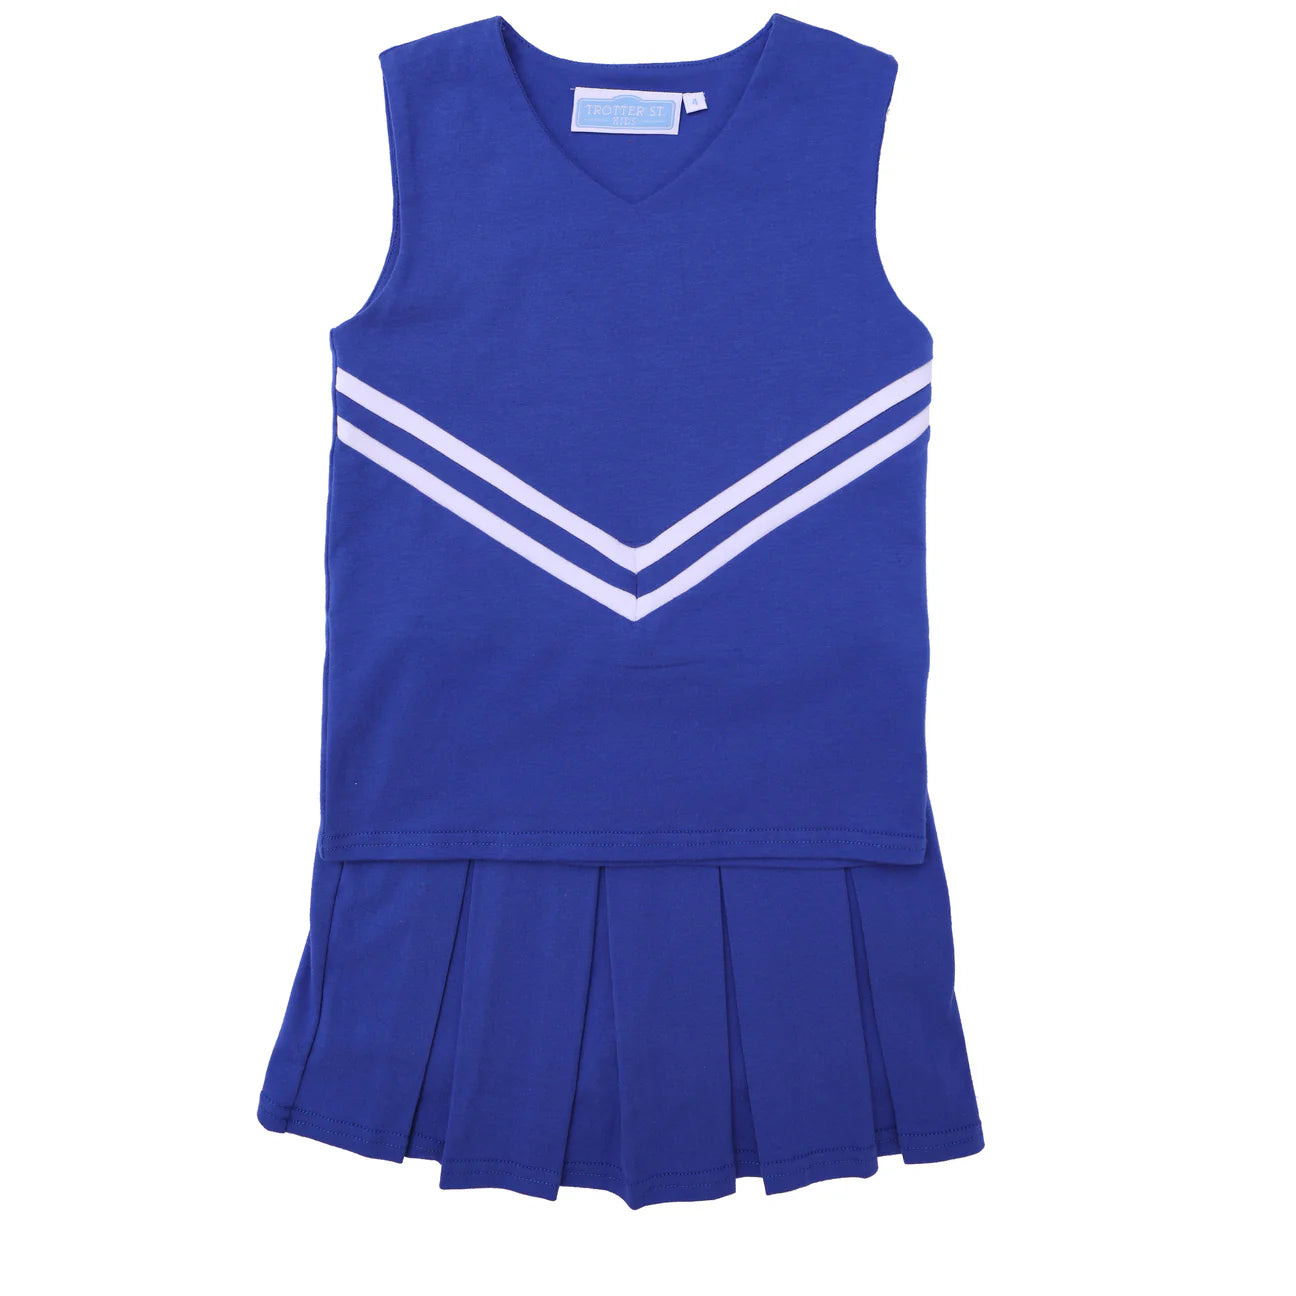 Trotter Street Kids - Cheer Uniform - Royal Blue